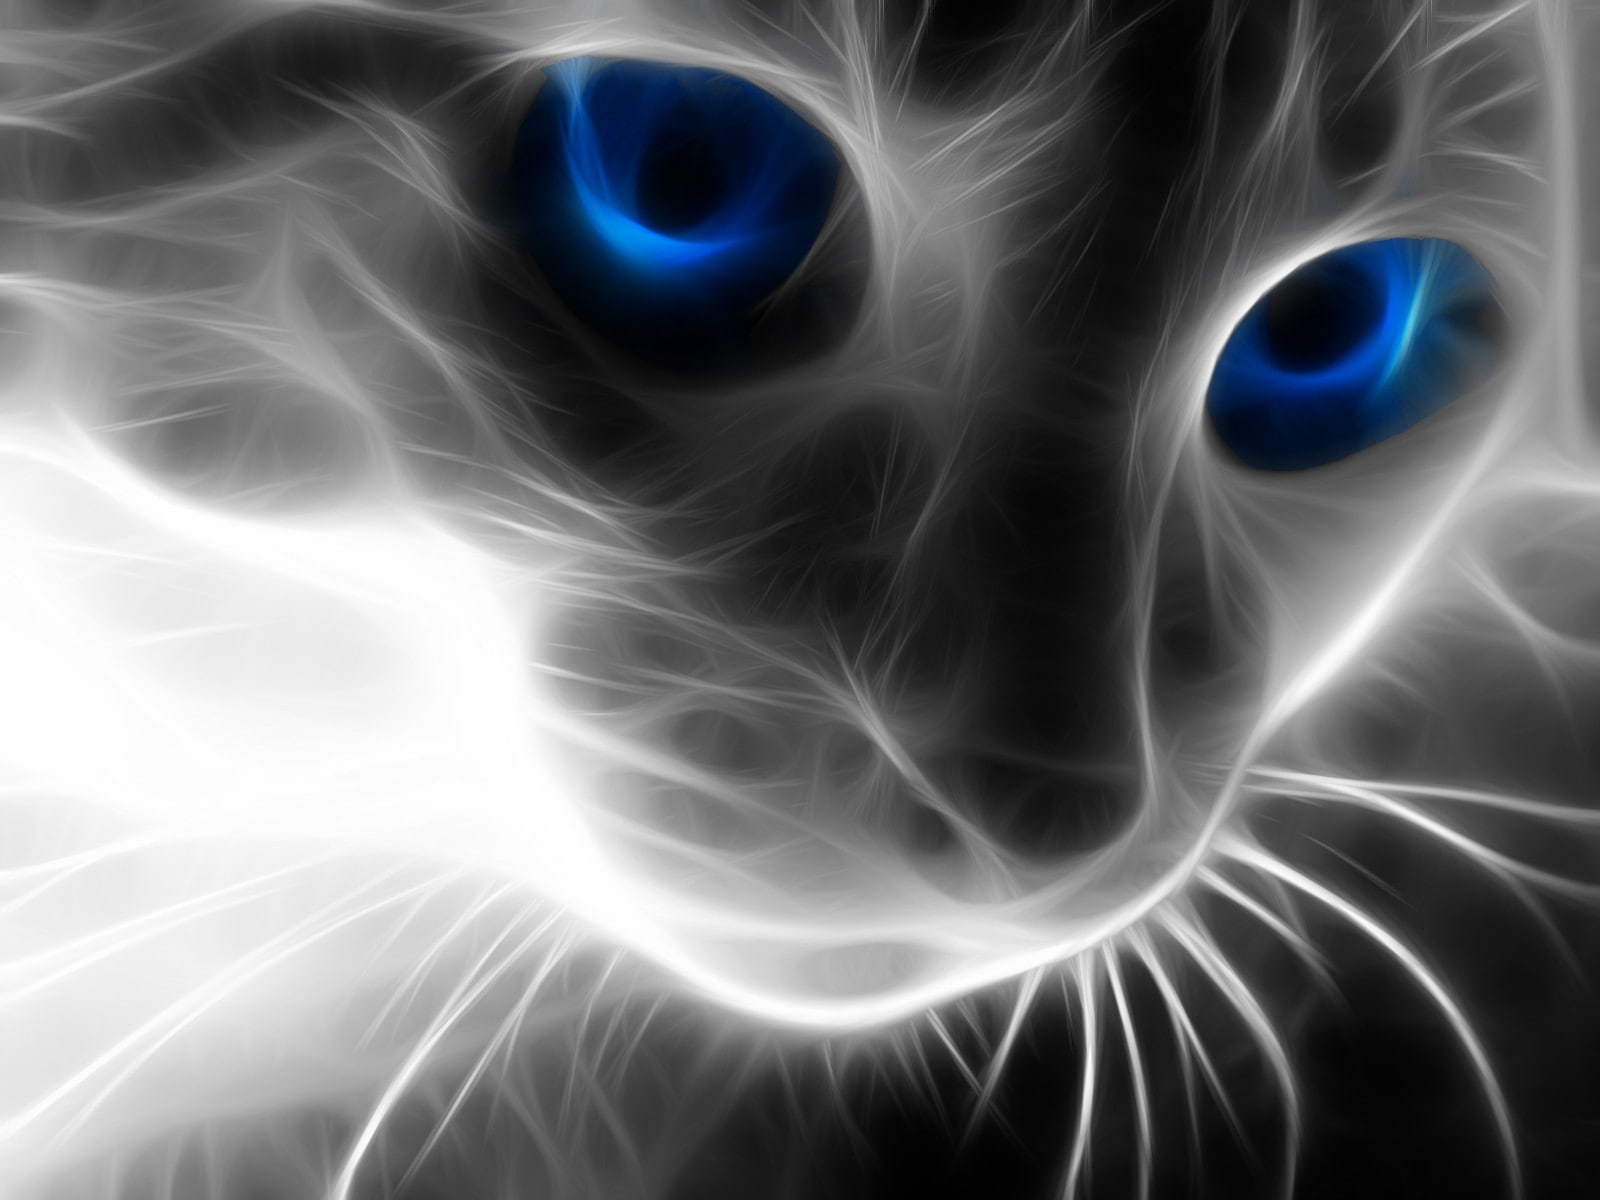 Fractalius, cat, blue eyes, animals